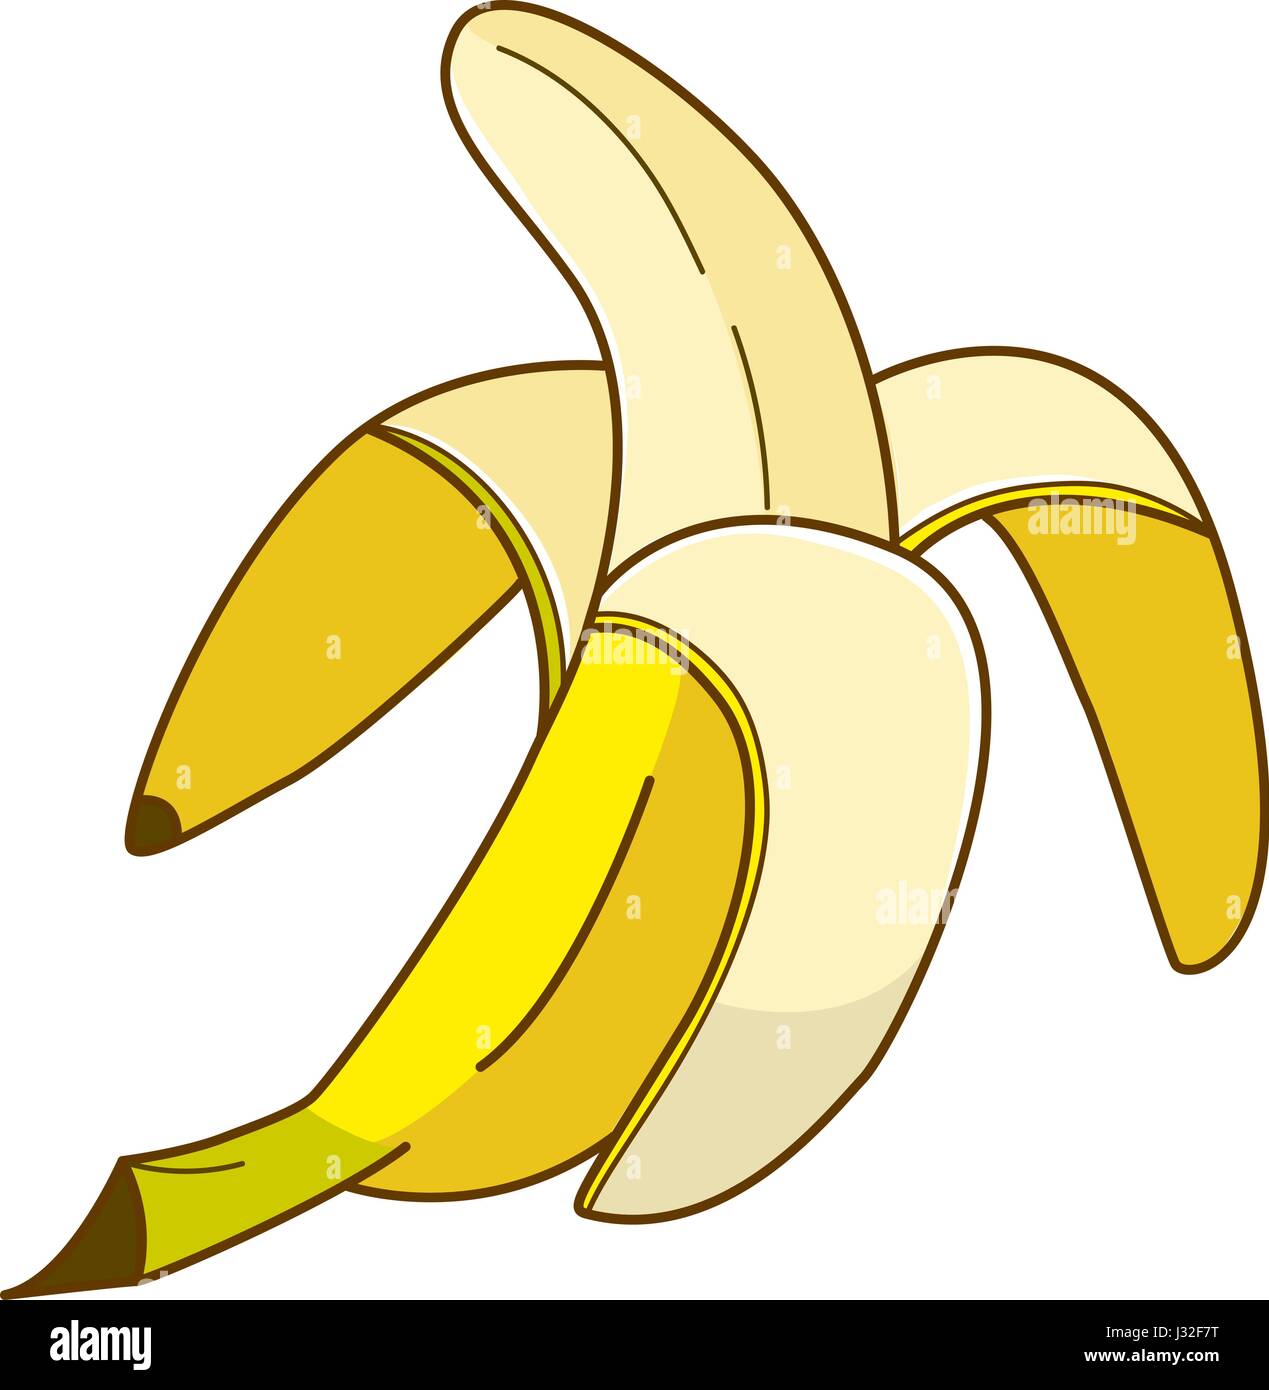 Yellow opened banana cartoon illustration Stock Vector Image & Art - Alamy